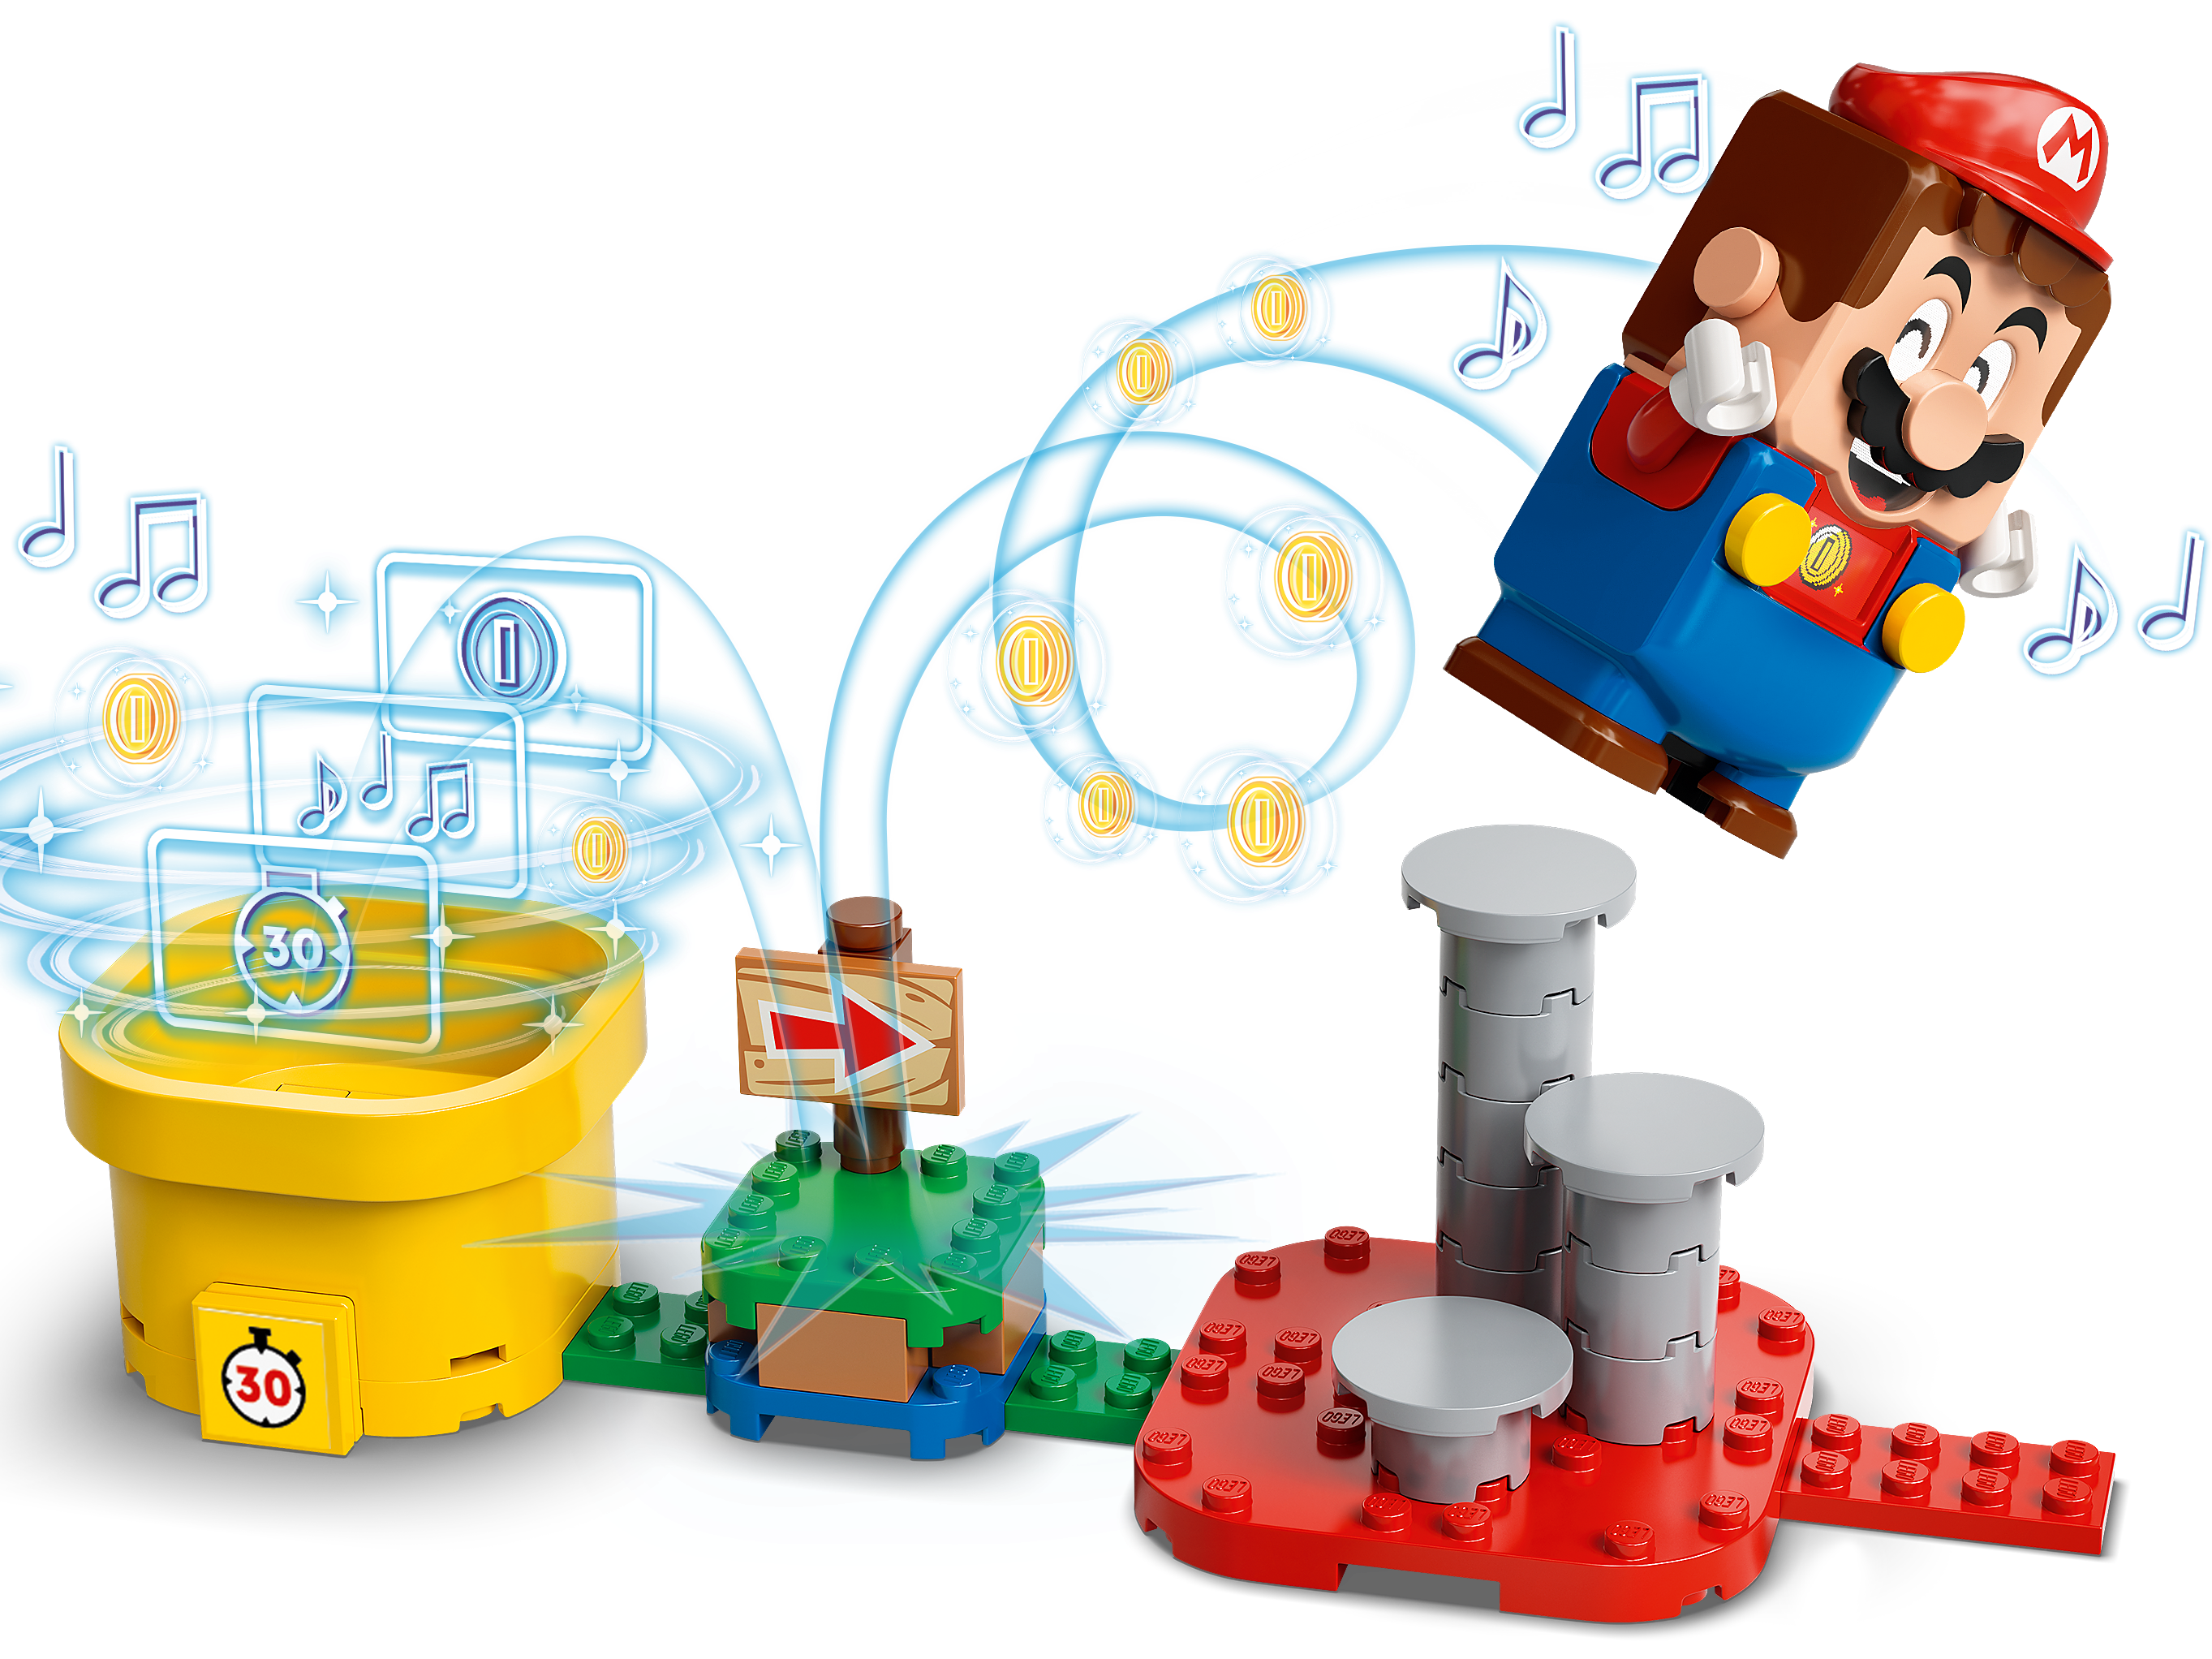 LEGO 71380 Super Mario Invent Your Own Adventure Creator Set - shoppydeals.com